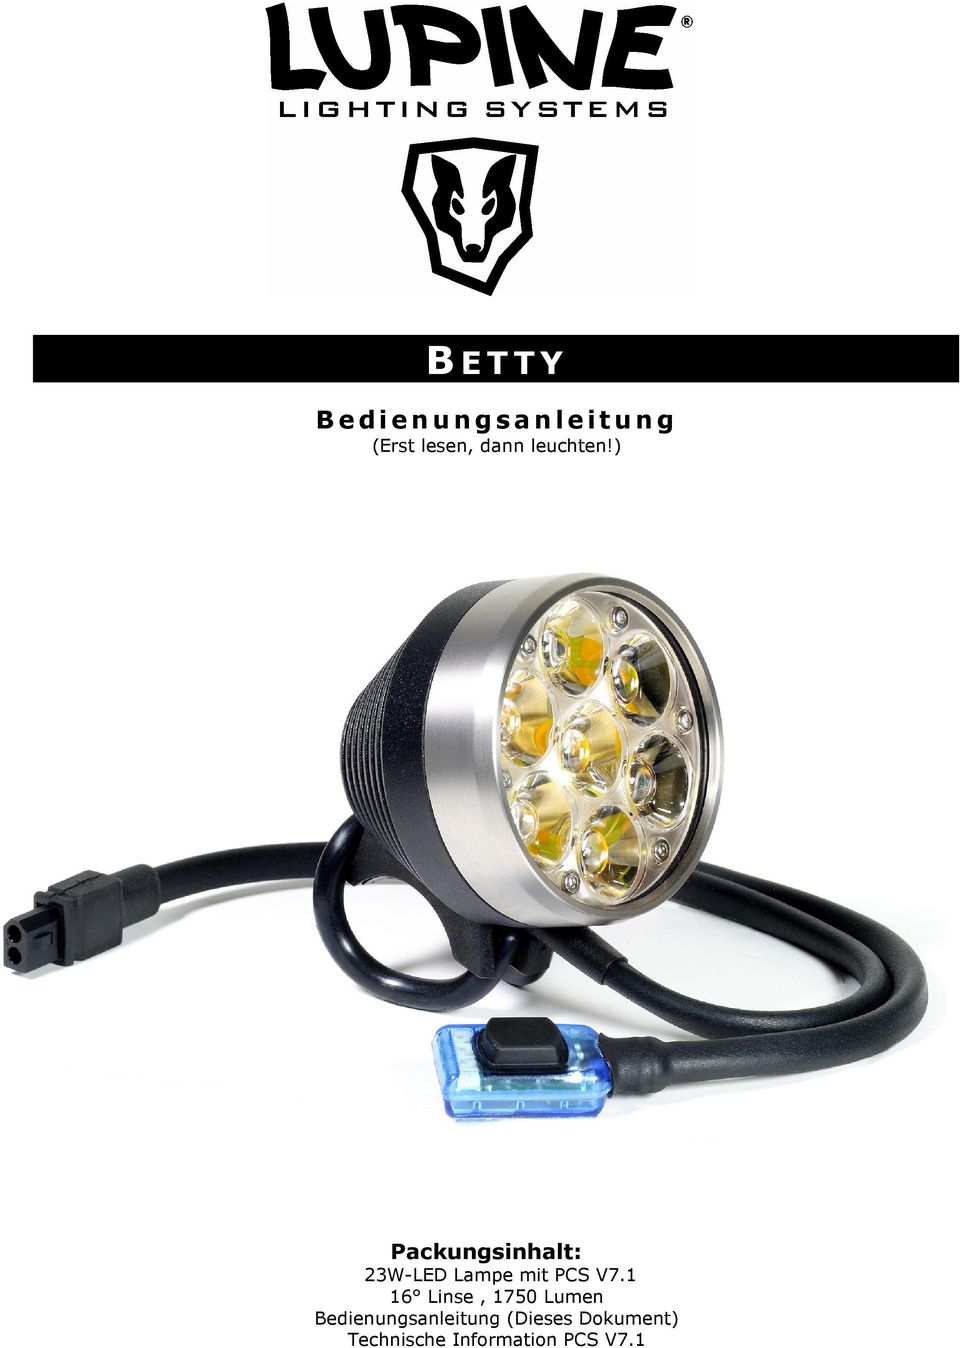 ) Packungsinhalt: 23W-LED Lampe mit PCS V7.